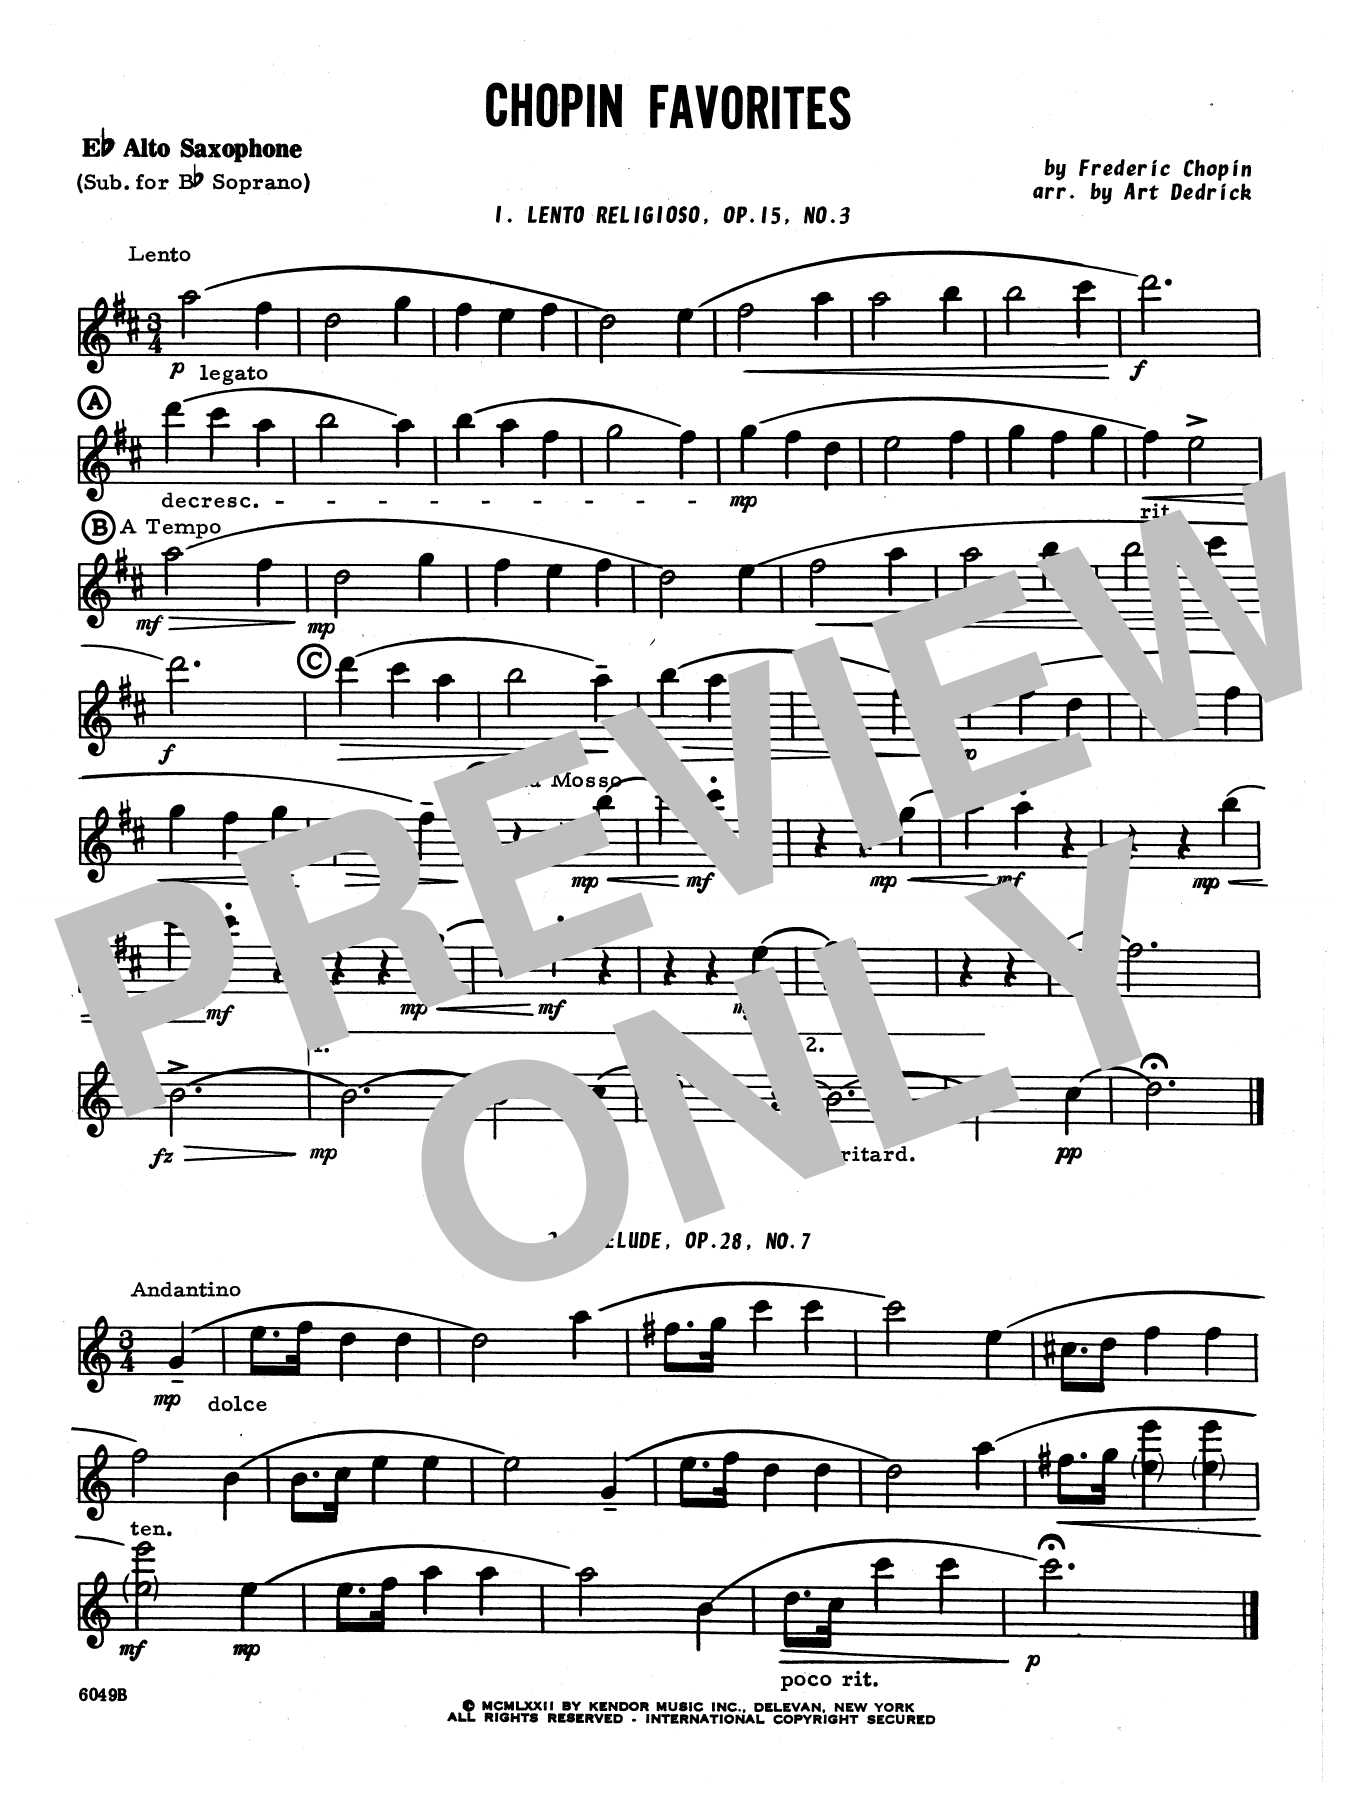 Download Art Dedrick Chopin Favorites - Opt. Alto Sax Sheet Music